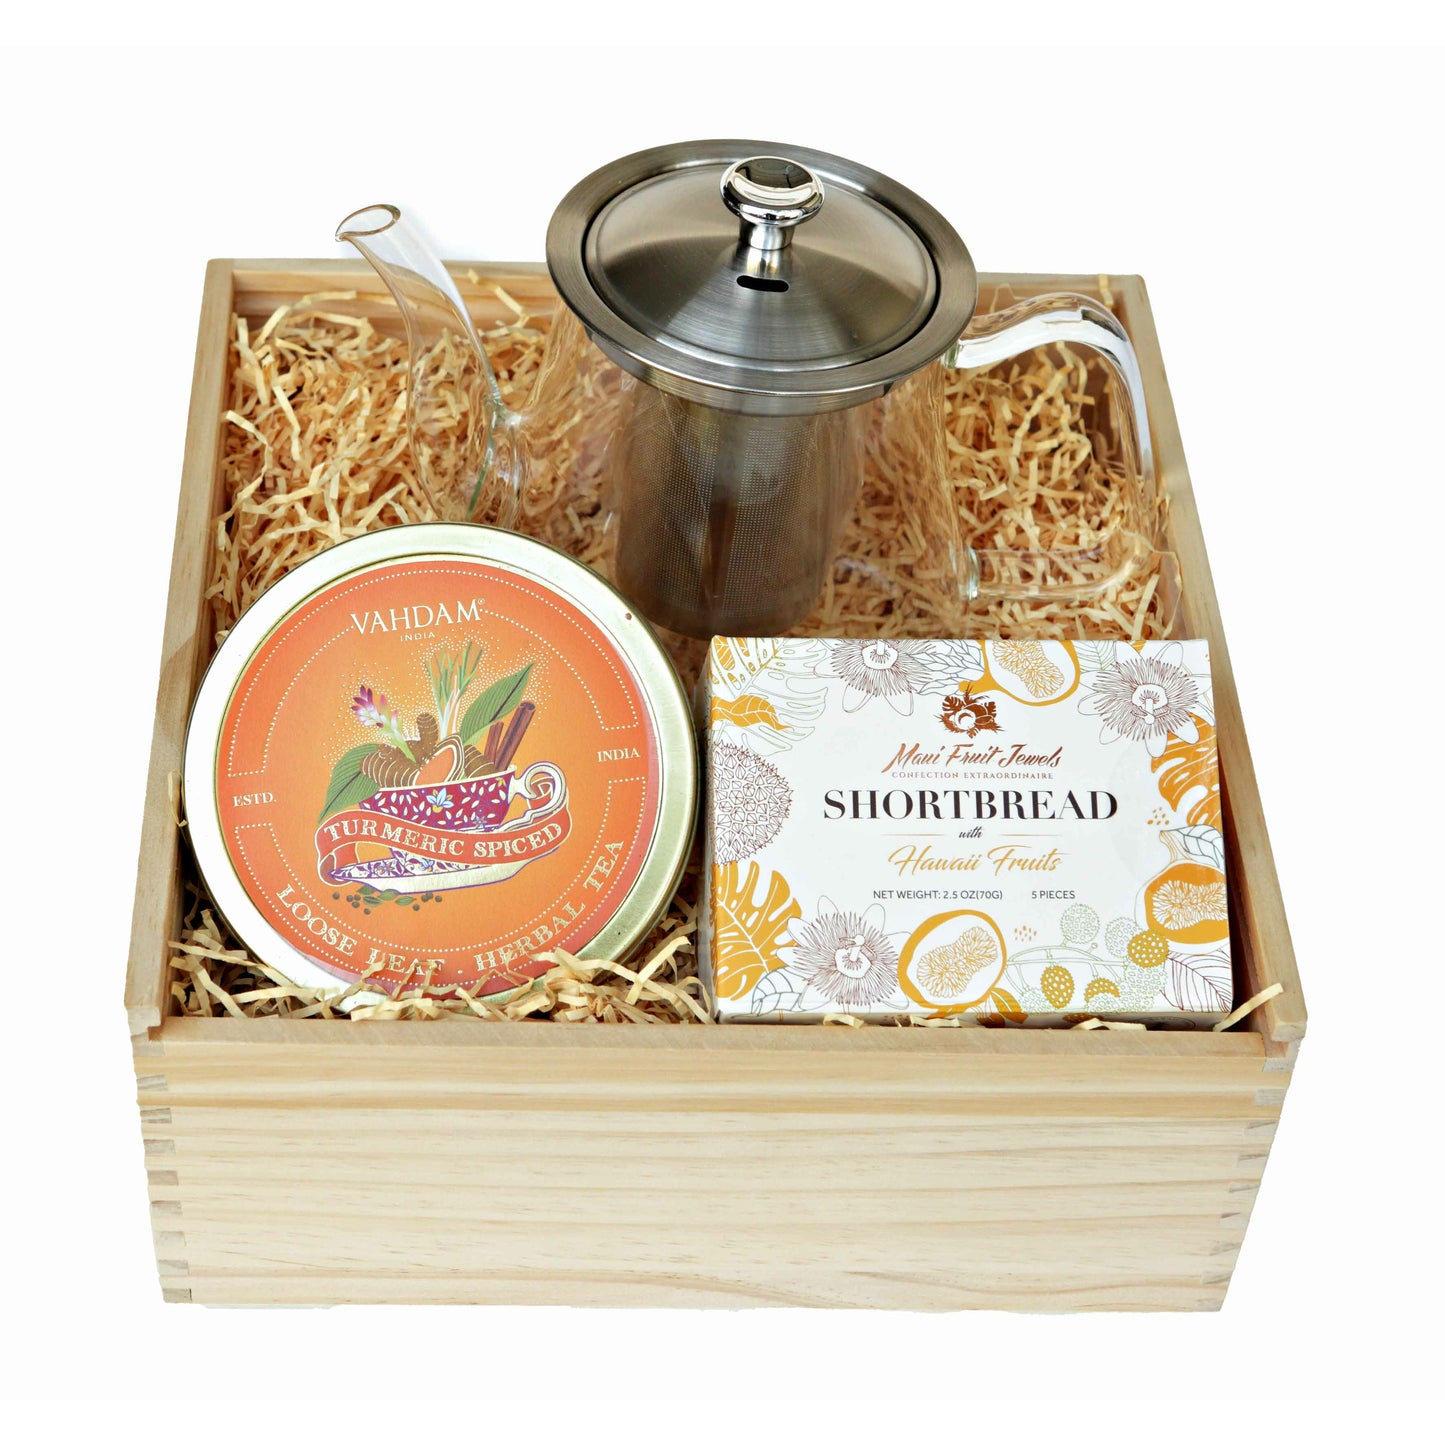 Vahdam Spiced Herbal Tea and Shortbread Gift Box - DJW Custom Baskets & Beyond